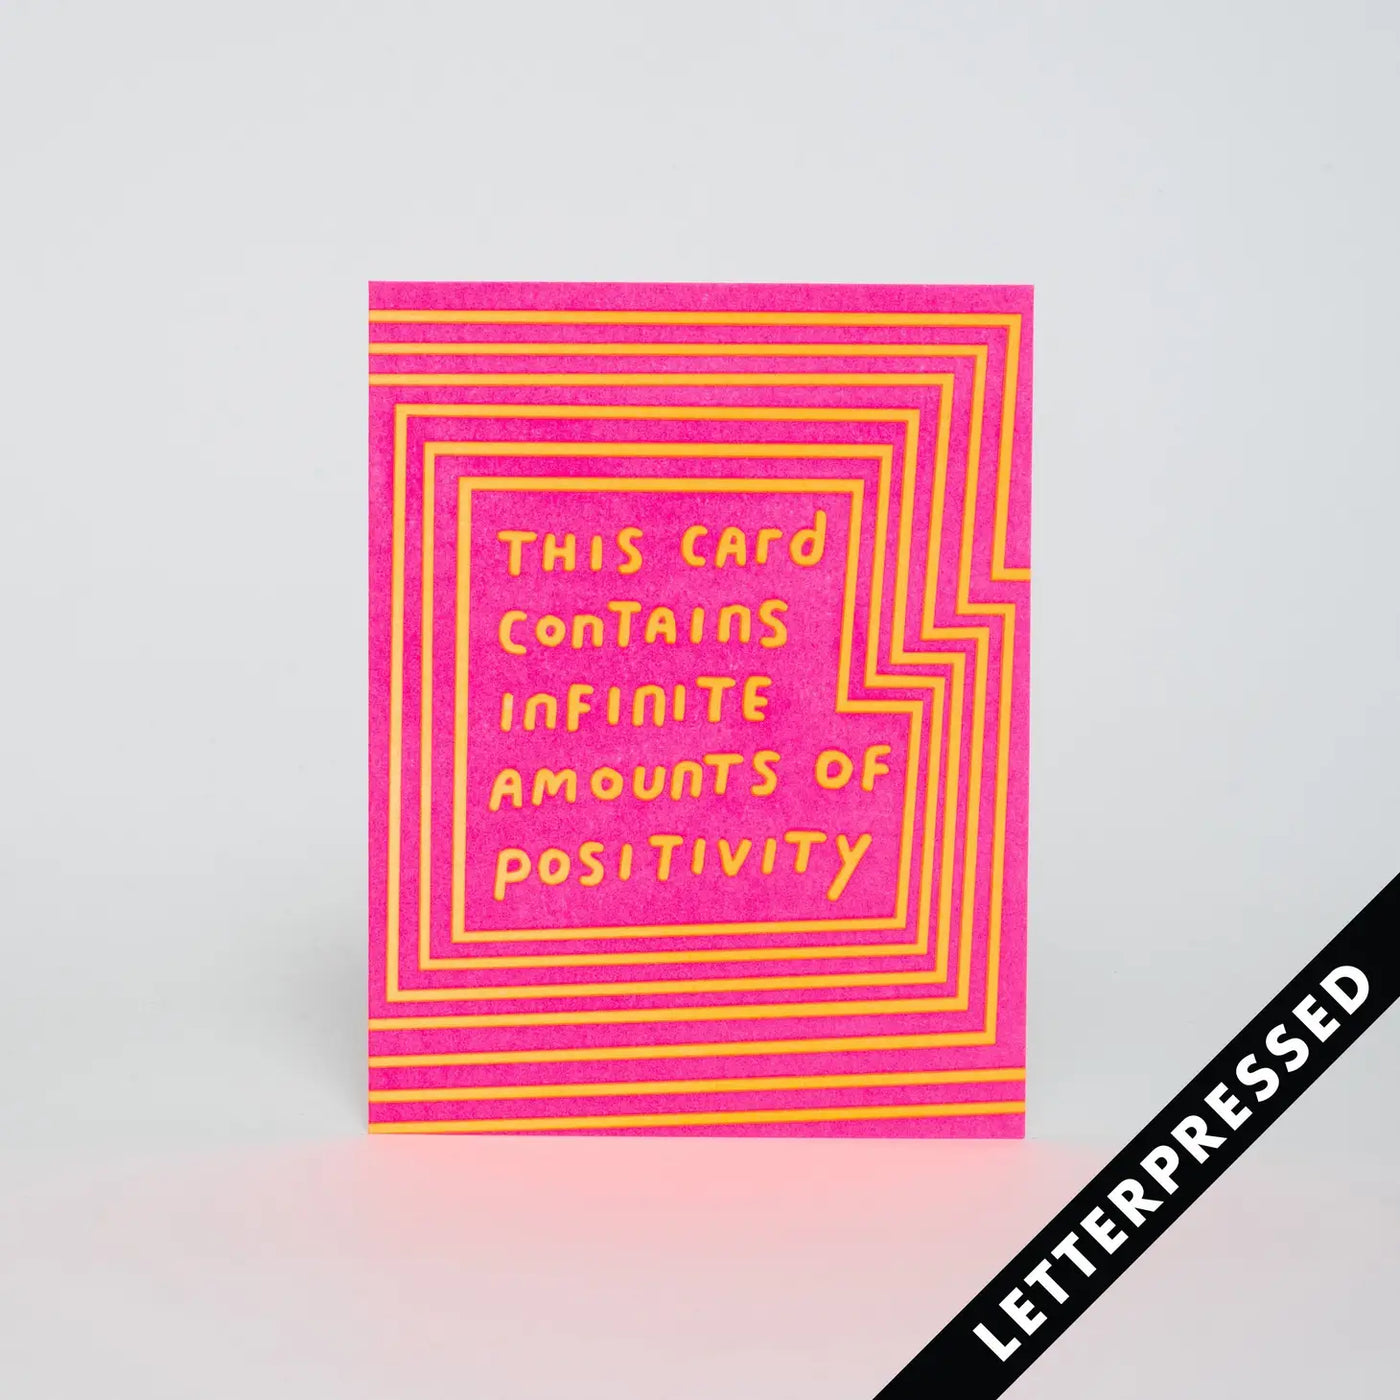 Infinite Positivity Card